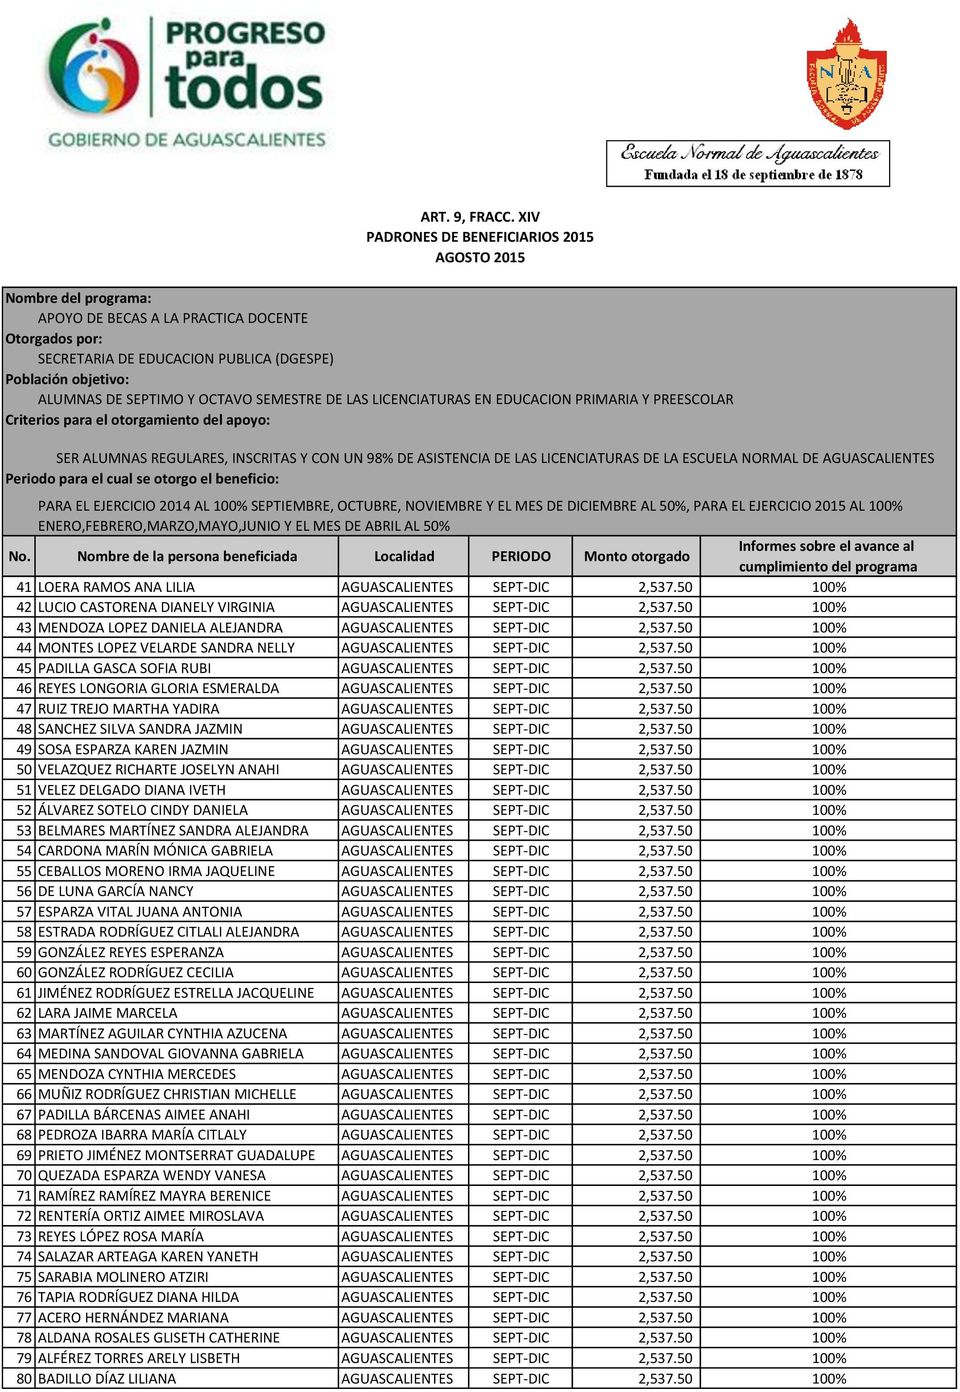 50 100% 45 PADILLA GASCA SOFIA RUBI AGUASCALIENTES SEPT-DIC 2,537.50 100% 46 REYES LONGORIA GLORIA ESMERALDA AGUASCALIENTES SEPT-DIC 2,537.